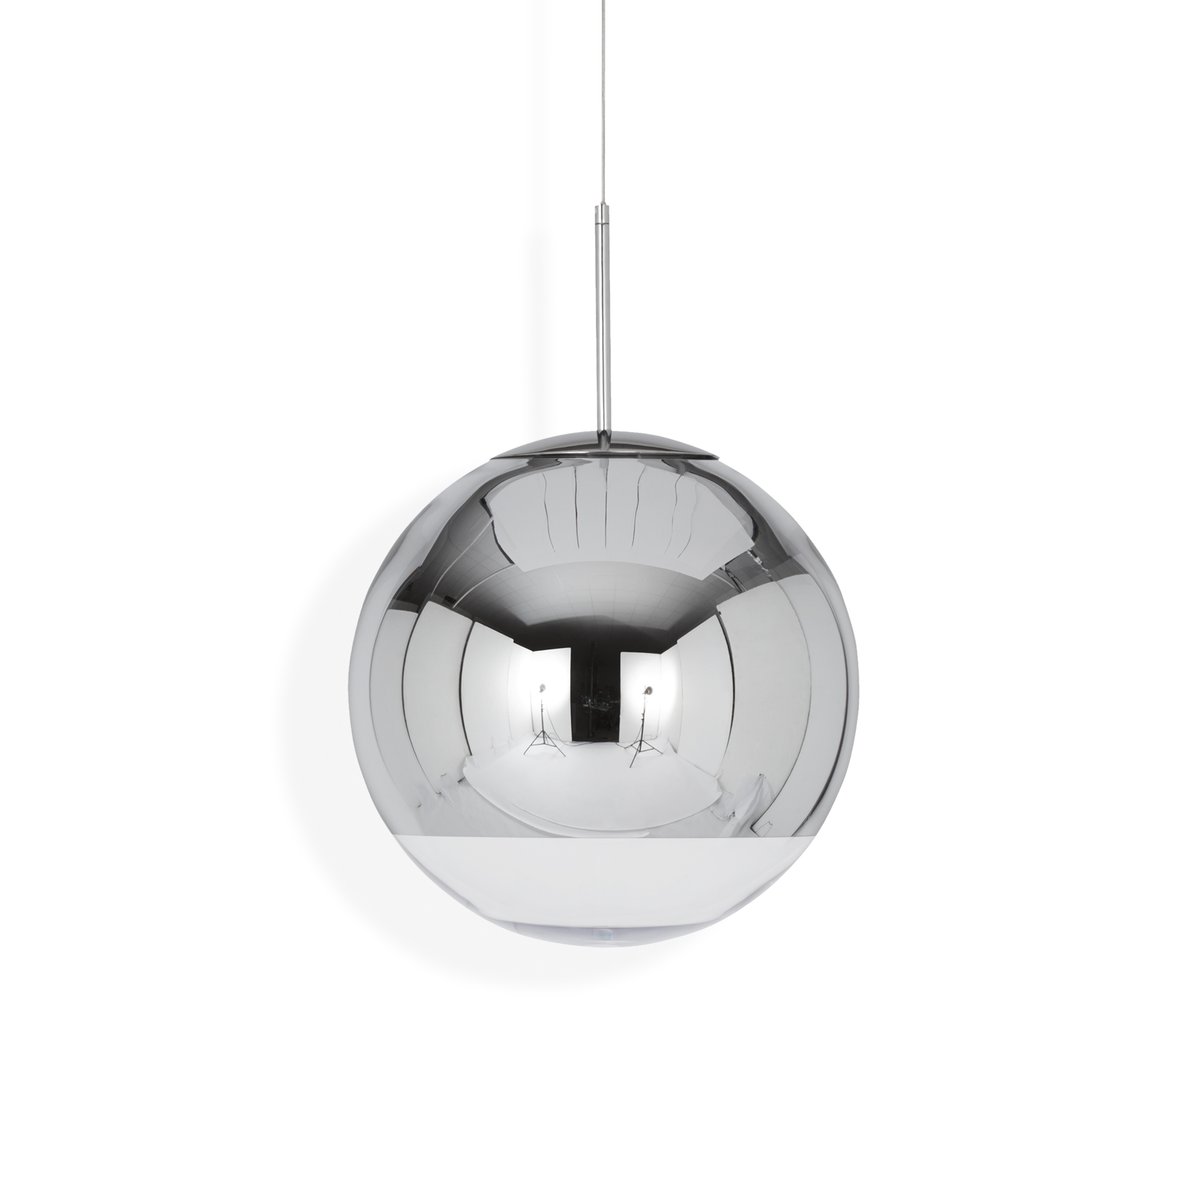 Tom Dixon Mirror Ball hanglamp LED Ø40 cm Chrome